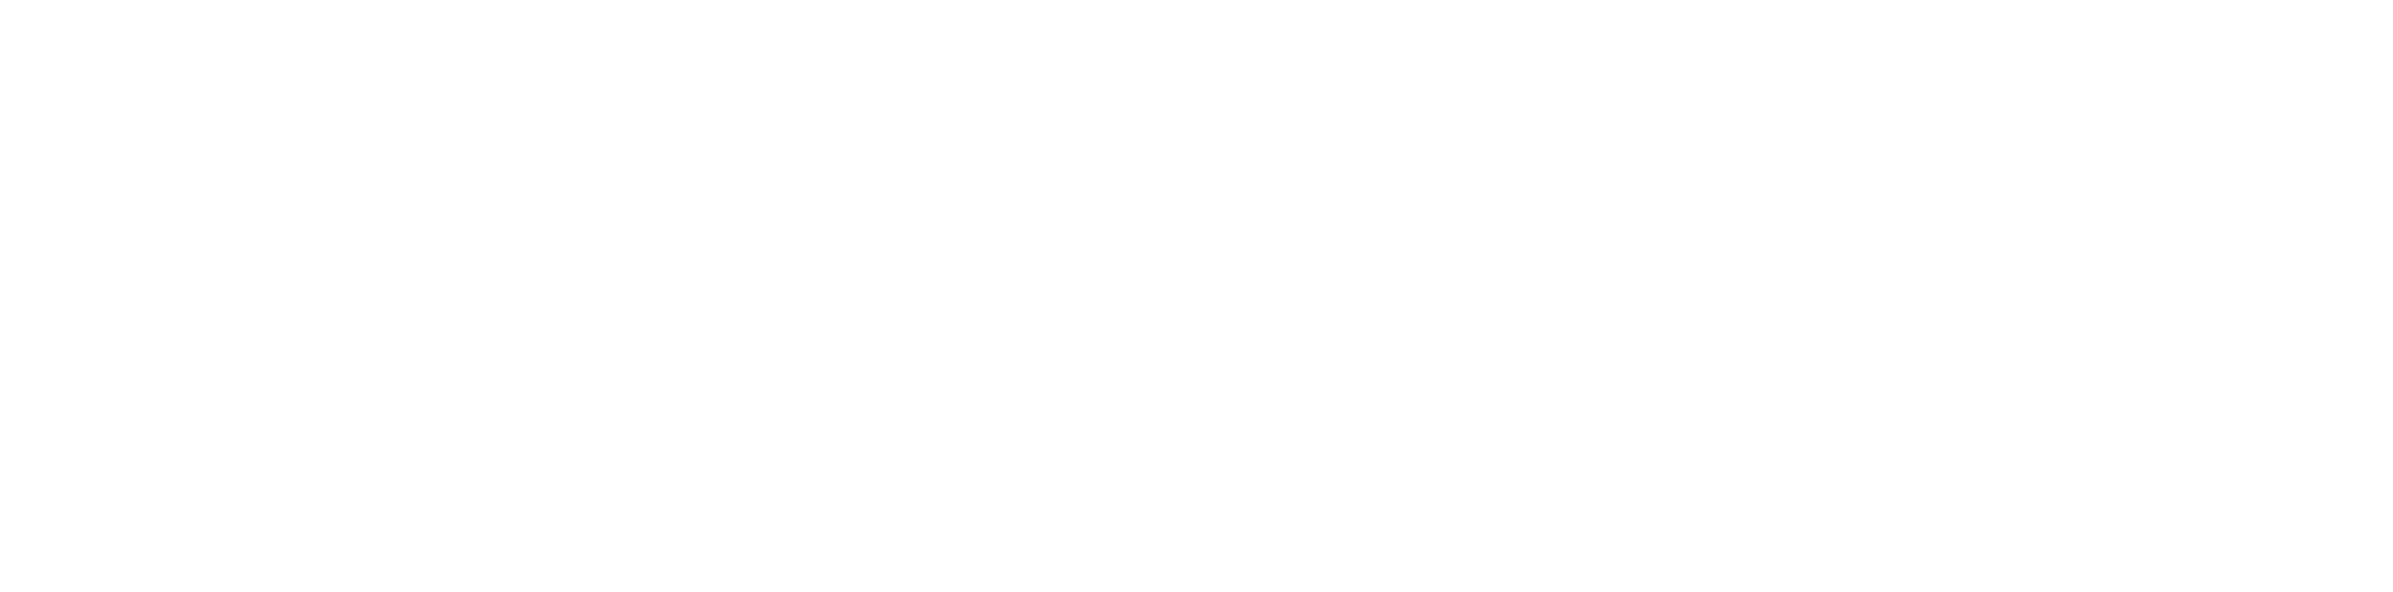 FINAL FANTASY XIV Online